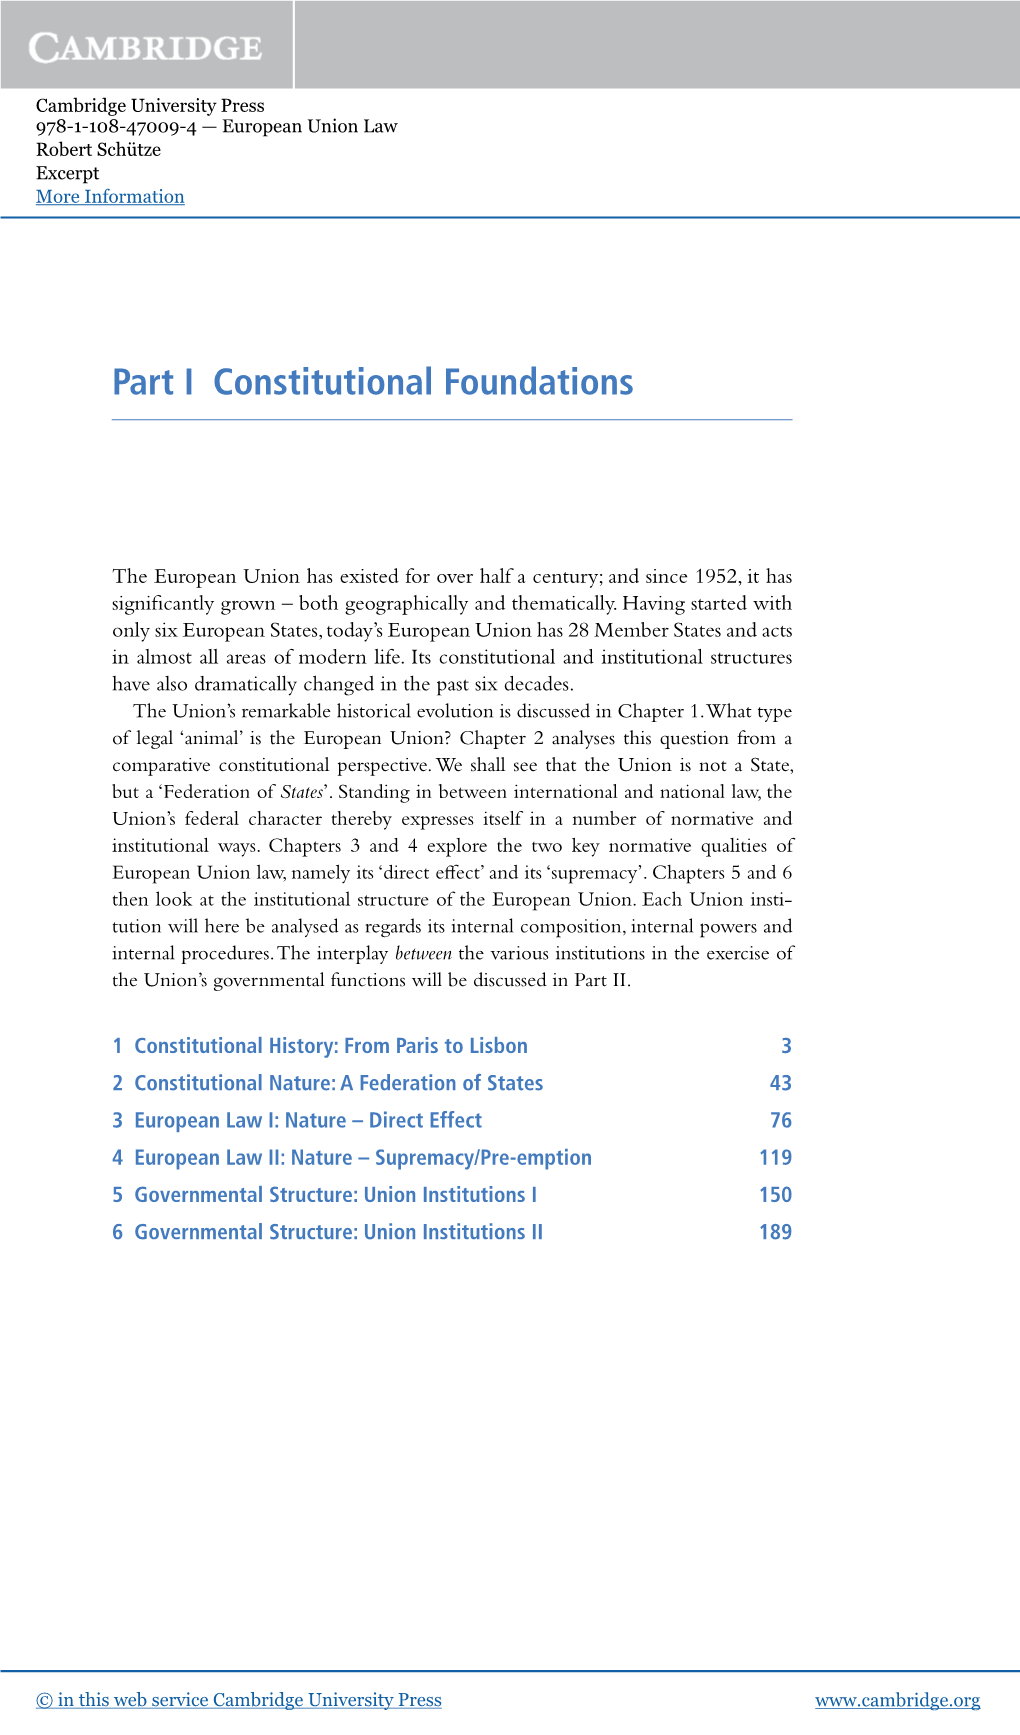 Part I Constitutional Foundations